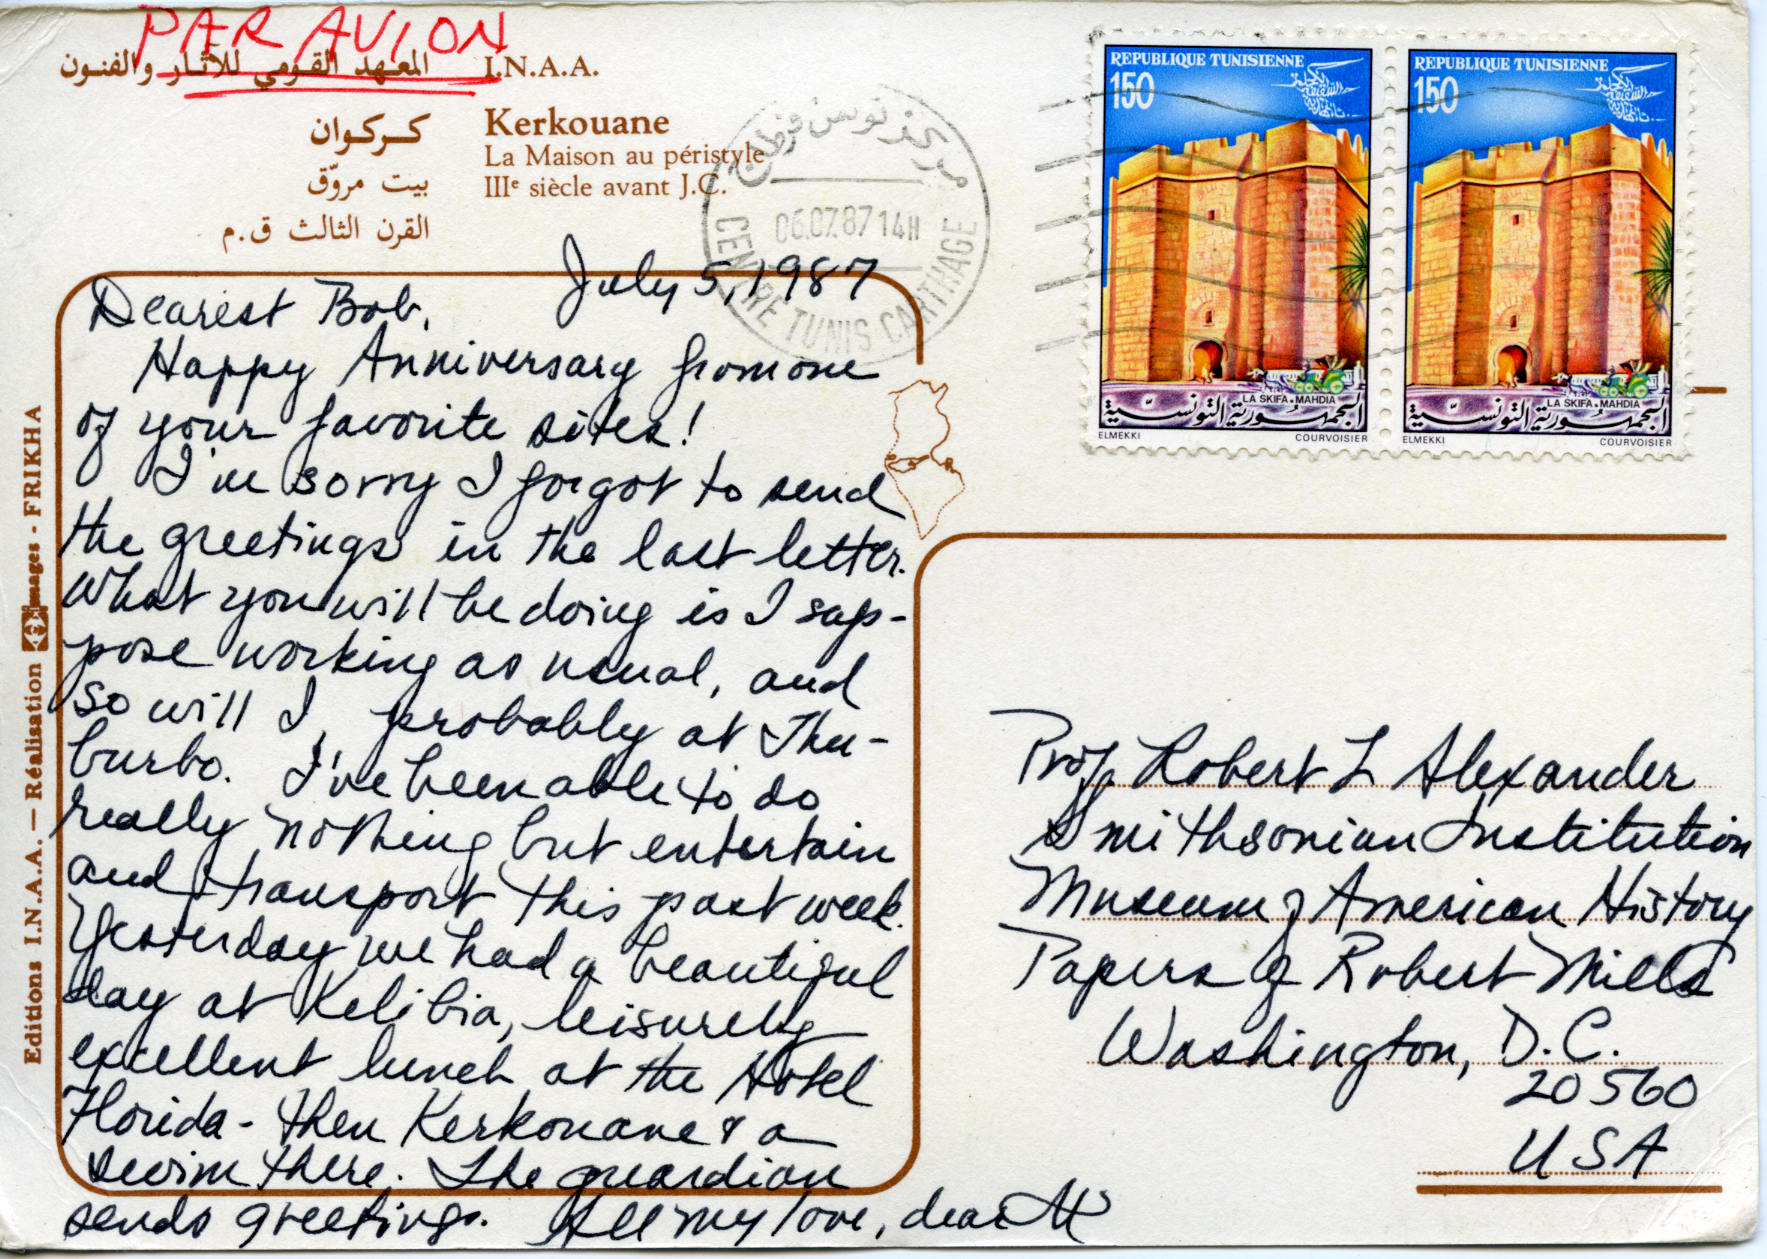 Postcard from Margaret Alexander to her husband, Robert